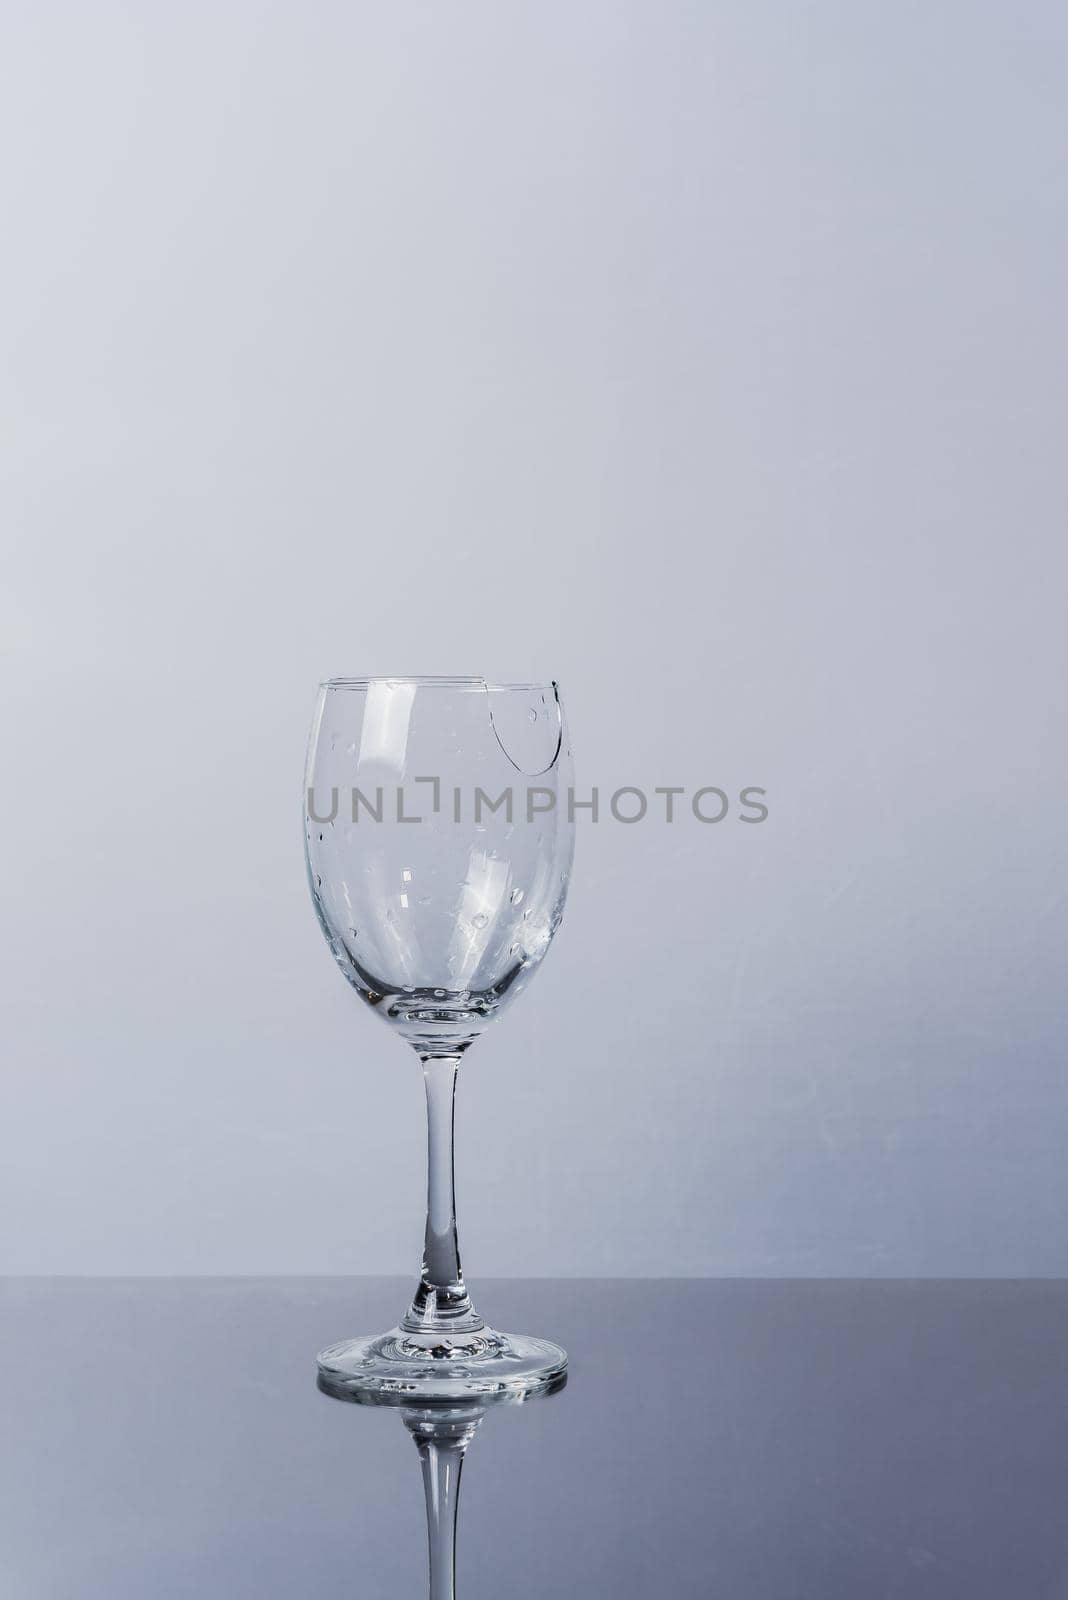 broken vine glass on white backgeound isolated by Wmpix